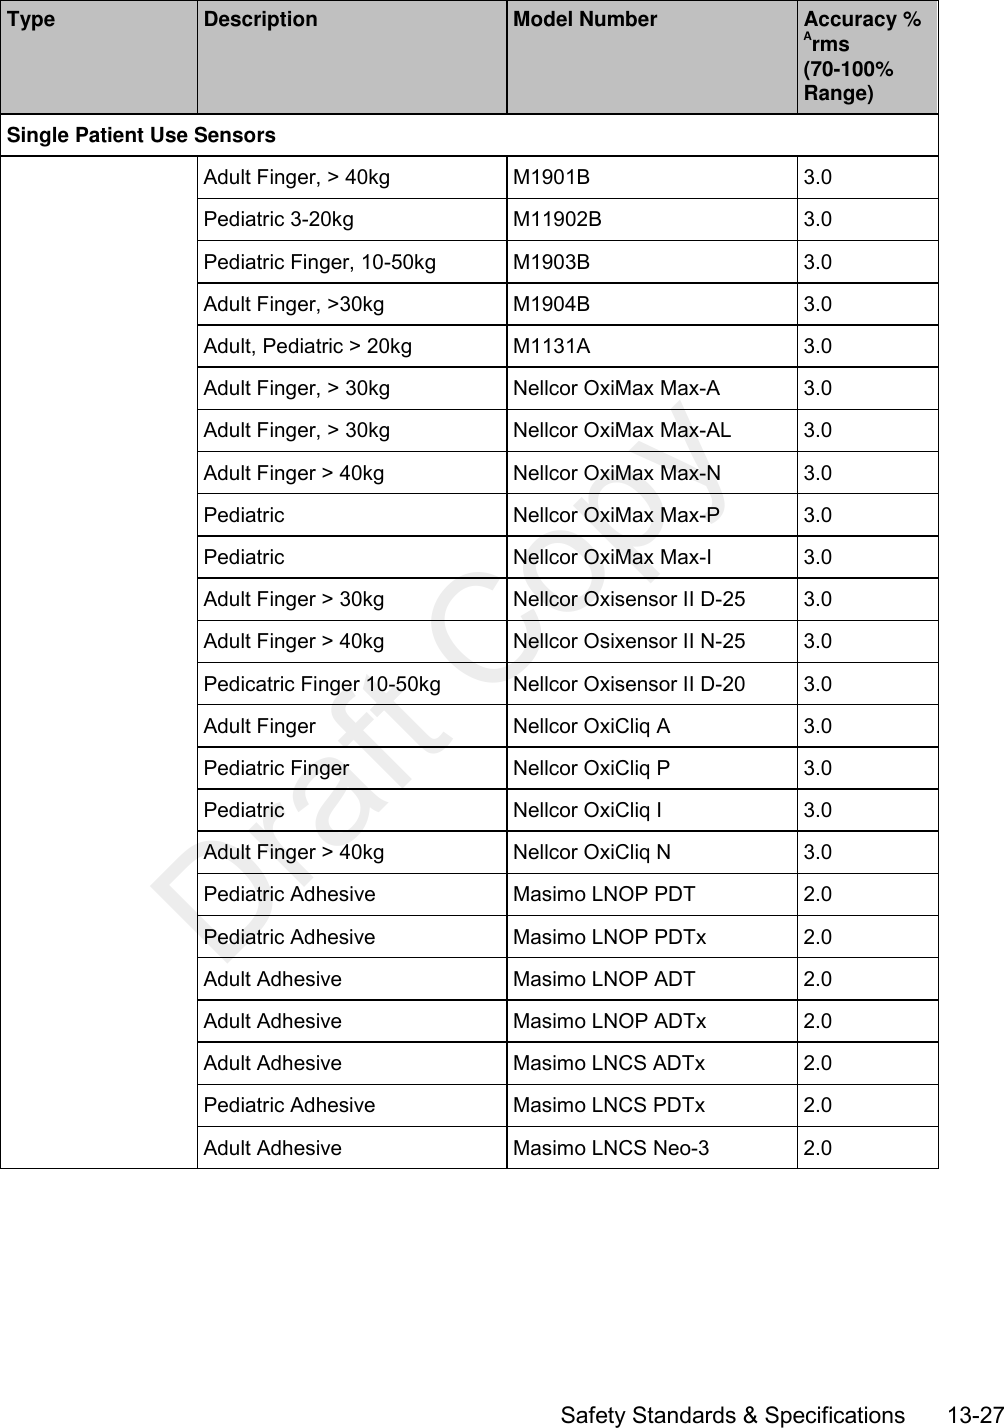      Safety Standards &amp; Specifications       13-27 Type Description Model Number Accuracy % Arms (70-100% Range) Single Patient Use Sensors  Adult Finger, &gt; 40kg M1901B 3.0 Pediatric 3-20kg M11902B 3.0 Pediatric Finger, 10-50kg M1903B 3.0 Adult Finger, &gt;30kg M1904B 3.0 Adult, Pediatric &gt; 20kg M1131A 3.0 Adult Finger, &gt; 30kg Nellcor OxiMax Max-A 3.0 Adult Finger, &gt; 30kg Nellcor OxiMax Max-AL 3.0 Adult Finger &gt; 40kg Nellcor OxiMax Max-N 3.0 Pediatric Nellcor OxiMax Max-P 3.0 Pediatric Nellcor OxiMax Max-I 3.0 Adult Finger &gt; 30kg Nellcor Oxisensor II D-25 3.0 Adult Finger &gt; 40kg Nellcor Osixensor II N-25 3.0 Pedicatric Finger 10-50kg Nellcor Oxisensor II D-20 3.0 Adult Finger Nellcor OxiCliq A 3.0 Pediatric Finger Nellcor OxiCliq P 3.0 Pediatric Nellcor OxiCliq I 3.0 Adult Finger &gt; 40kg Nellcor OxiCliq N 3.0 Pediatric Adhesive Masimo LNOP PDT 2.0 Pediatric Adhesive Masimo LNOP PDTx 2.0 Adult Adhesive Masimo LNOP ADT 2.0 Adult Adhesive Masimo LNOP ADTx 2.0 Adult Adhesive Masimo LNCS ADTx 2.0 Pediatric Adhesive Masimo LNCS PDTx 2.0 Adult Adhesive Masimo LNCS Neo-3 2.0  Draft Copy